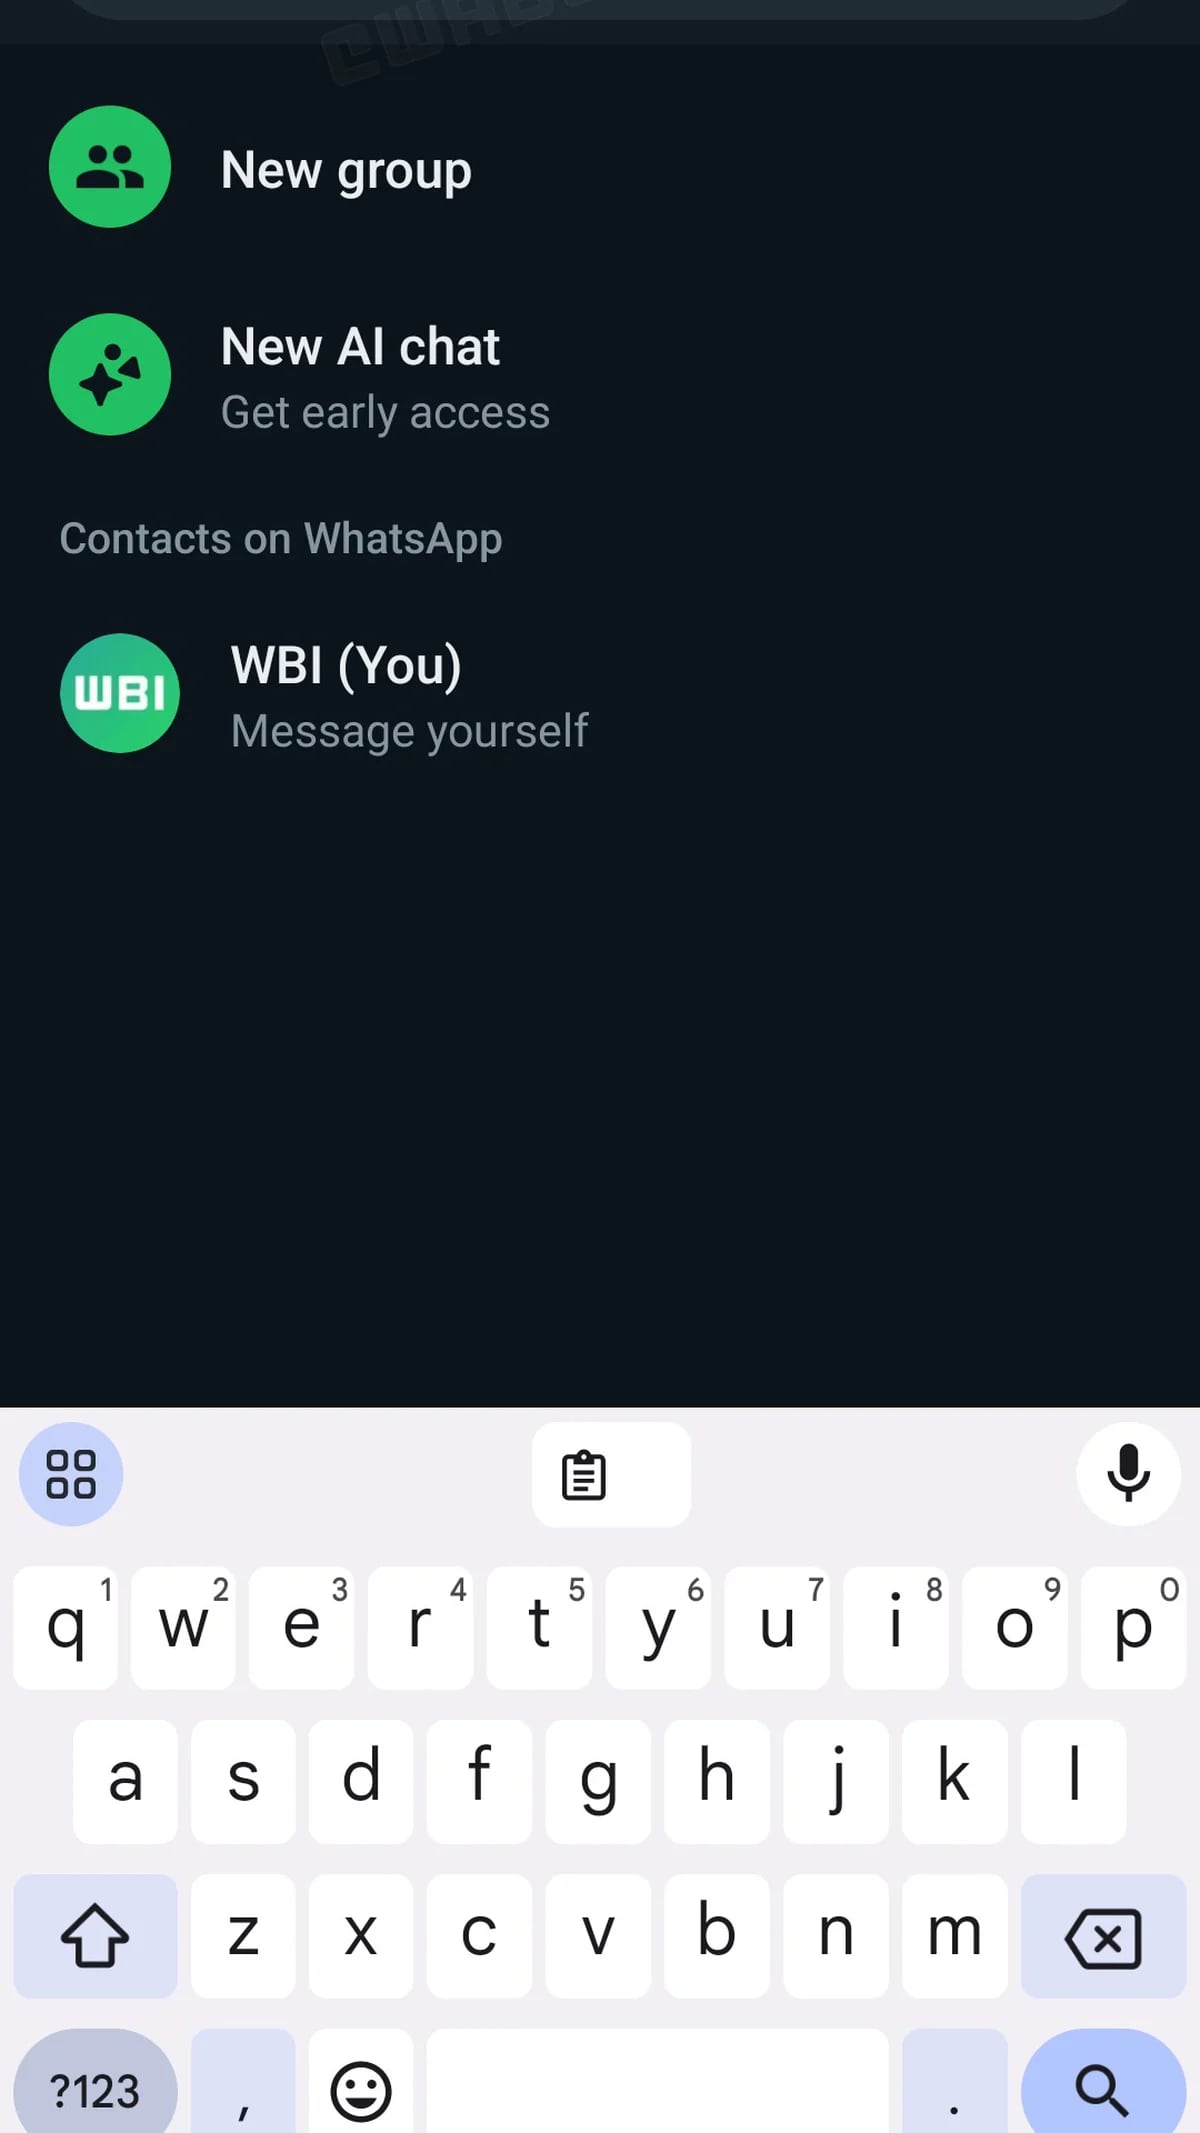 WhatsApp permitirá buscar contactos por nombre de usuario único - Infobae